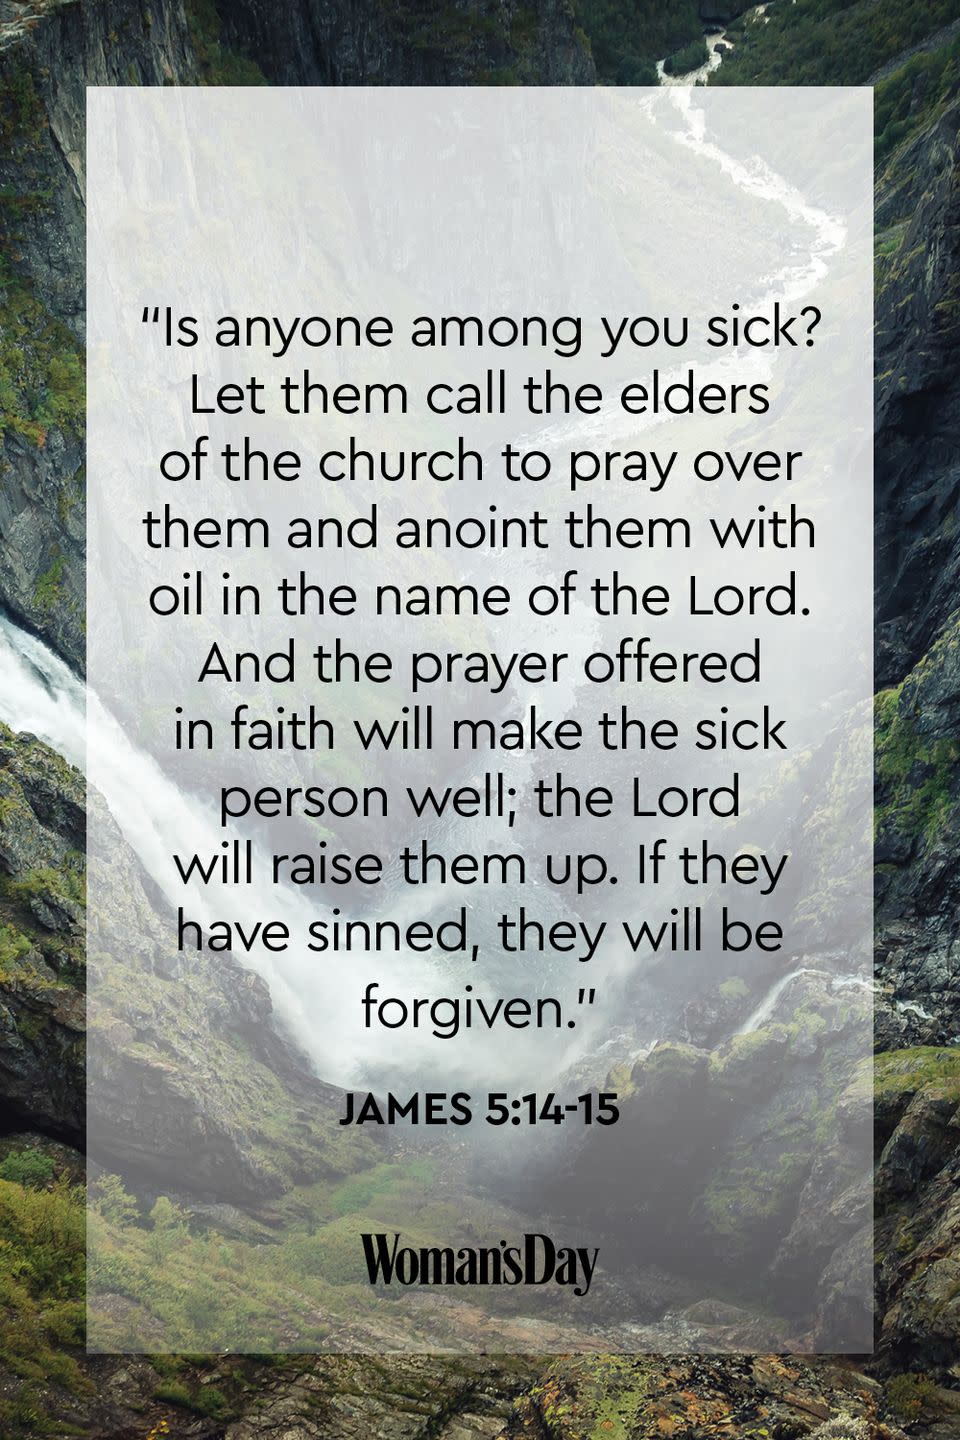 James 5:14-15